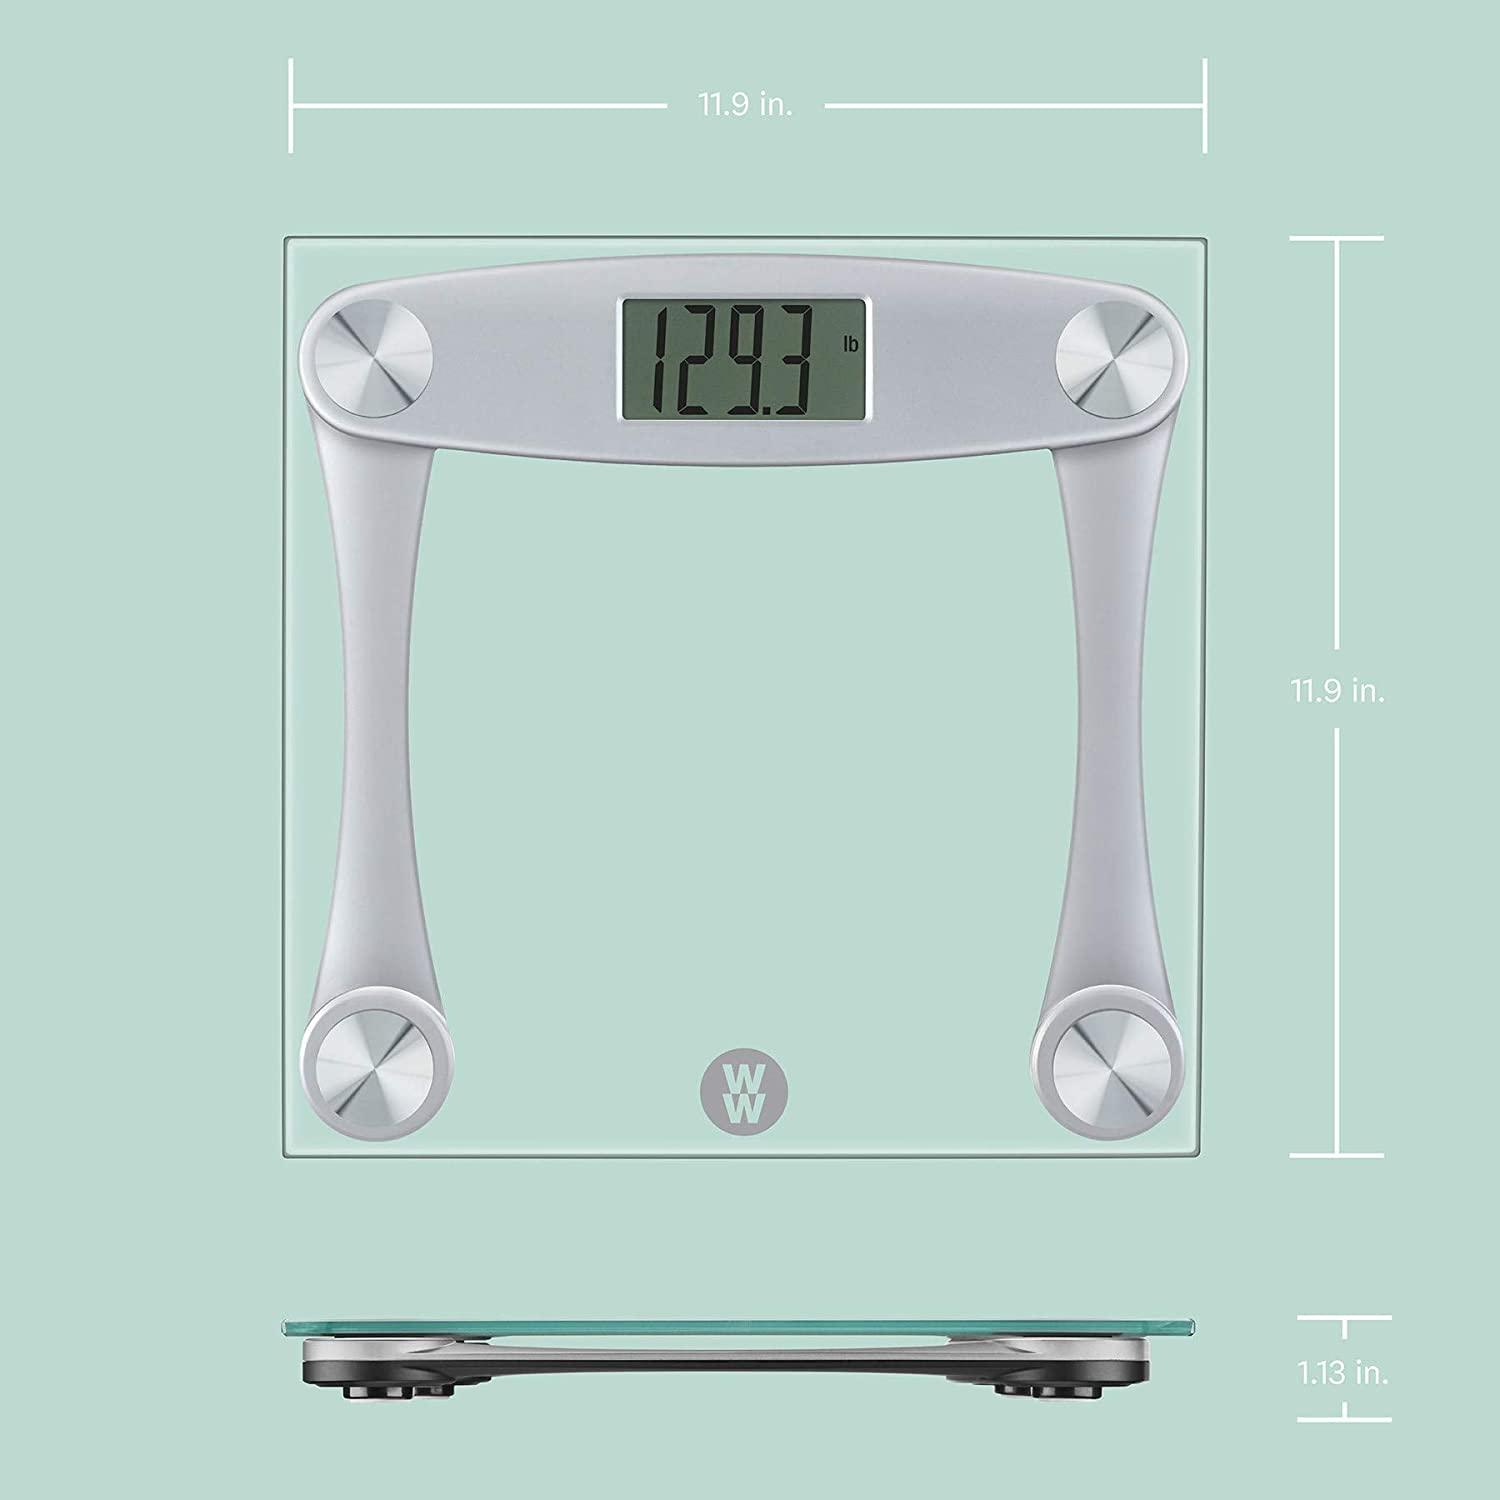 Ww Scales By Conair Digital Glass Scale